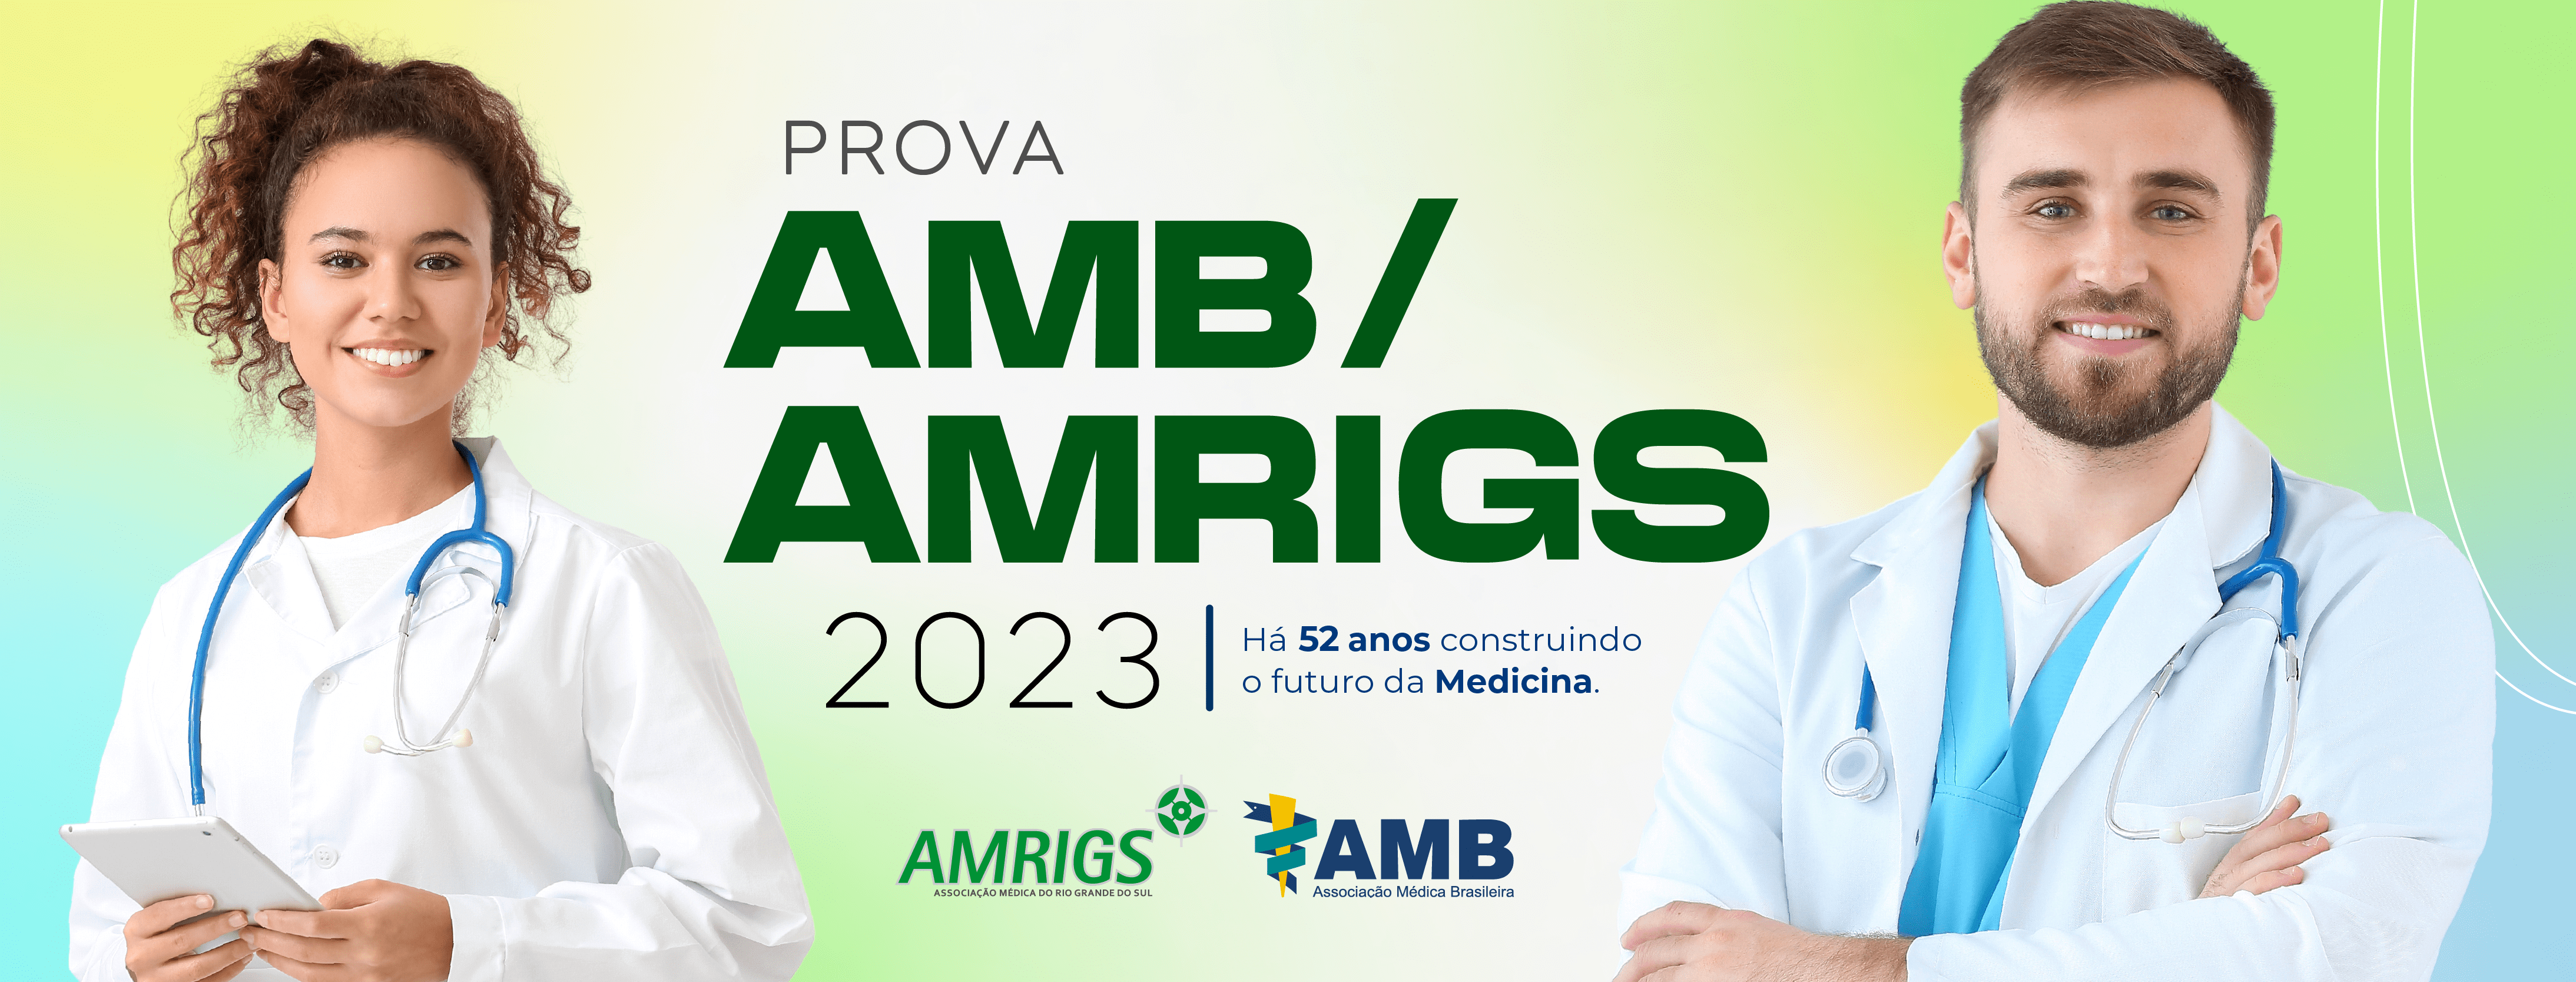 Prova AMB/AMRIGS | banner